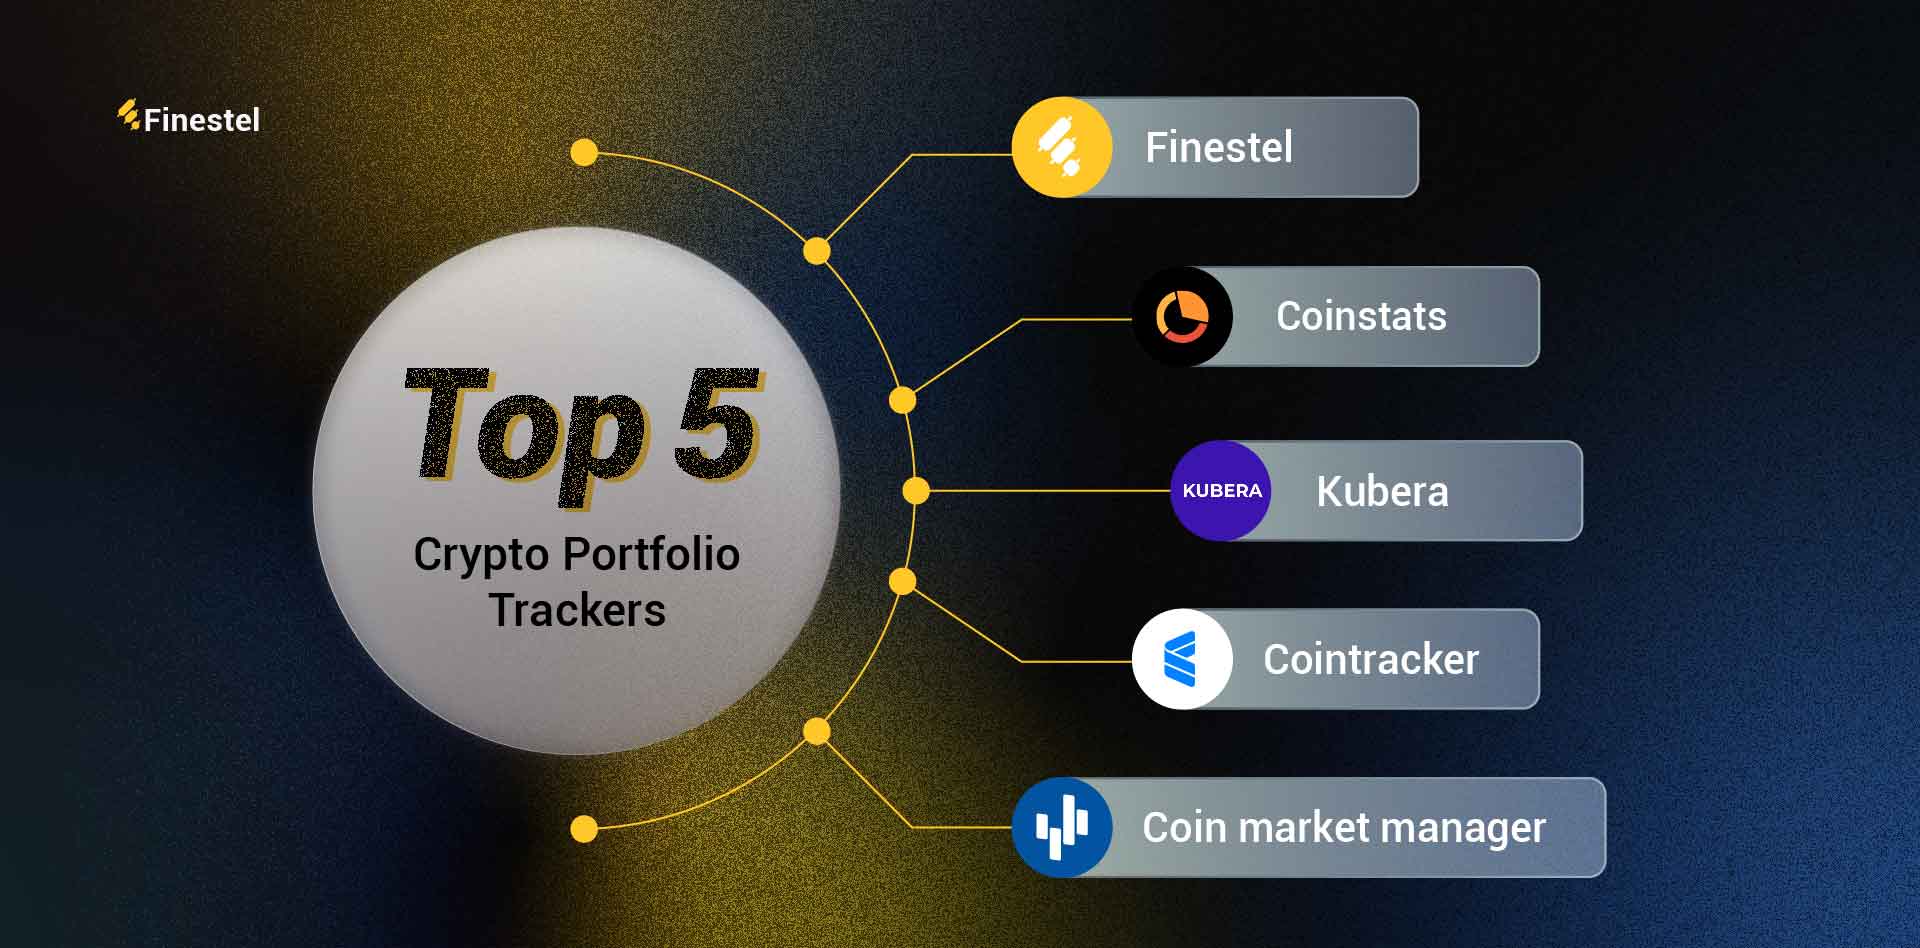 Top 5 crypto portfolio trackers